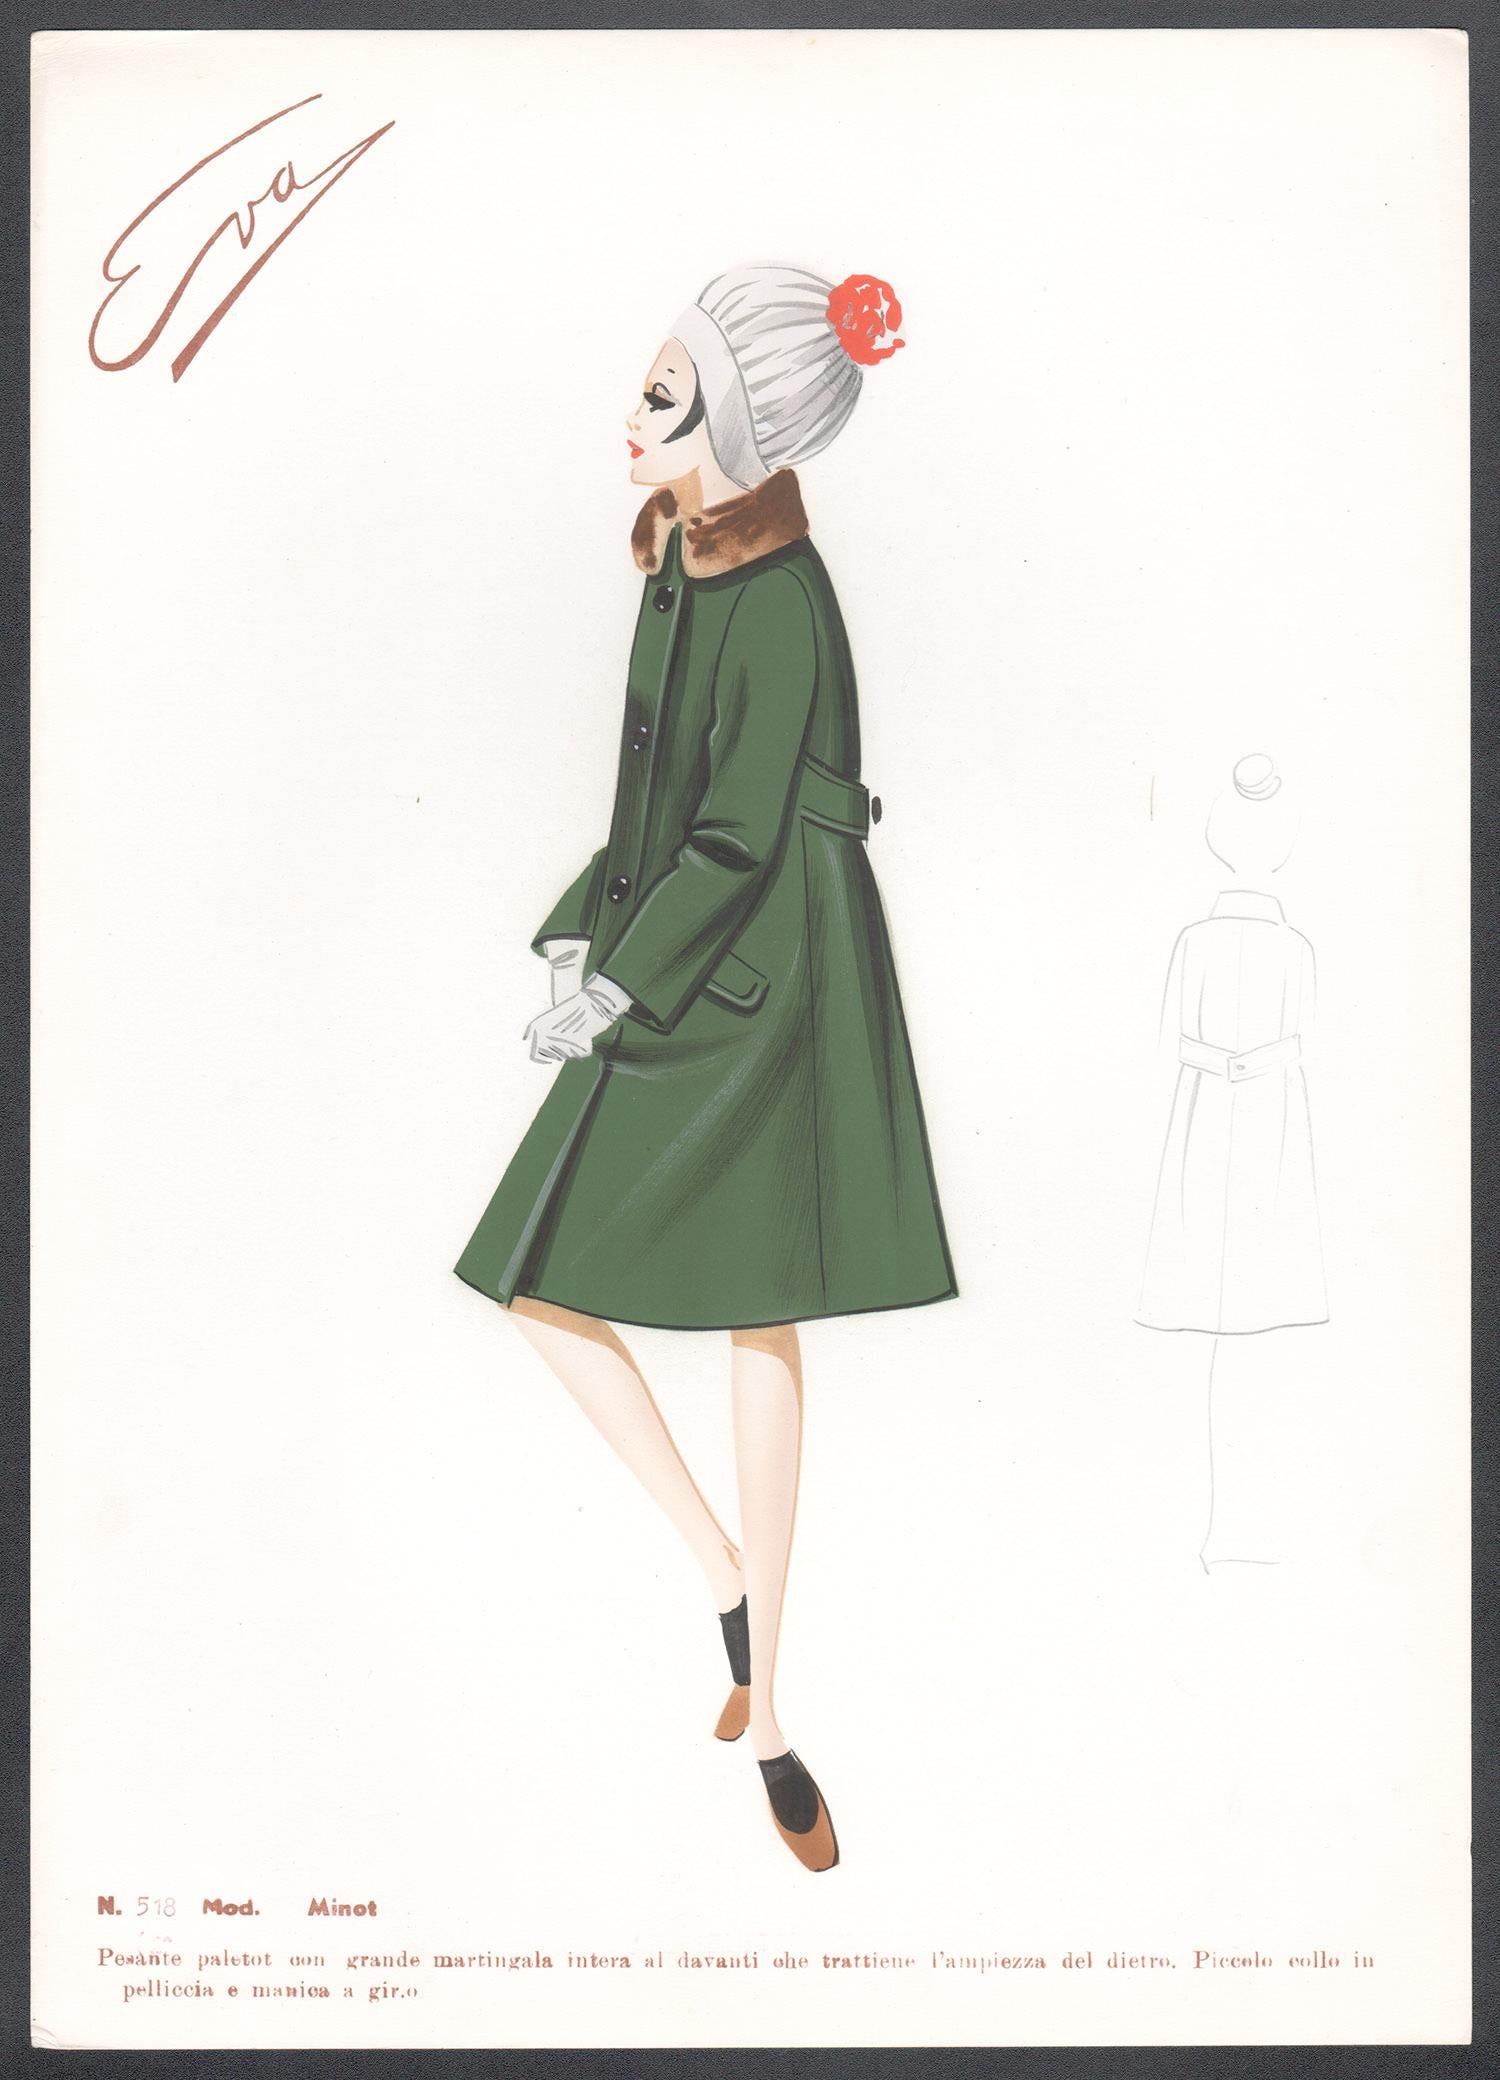 Unknown Figurative Print - 'Minot' Italian 1960s Women's Fashion Design Illustration